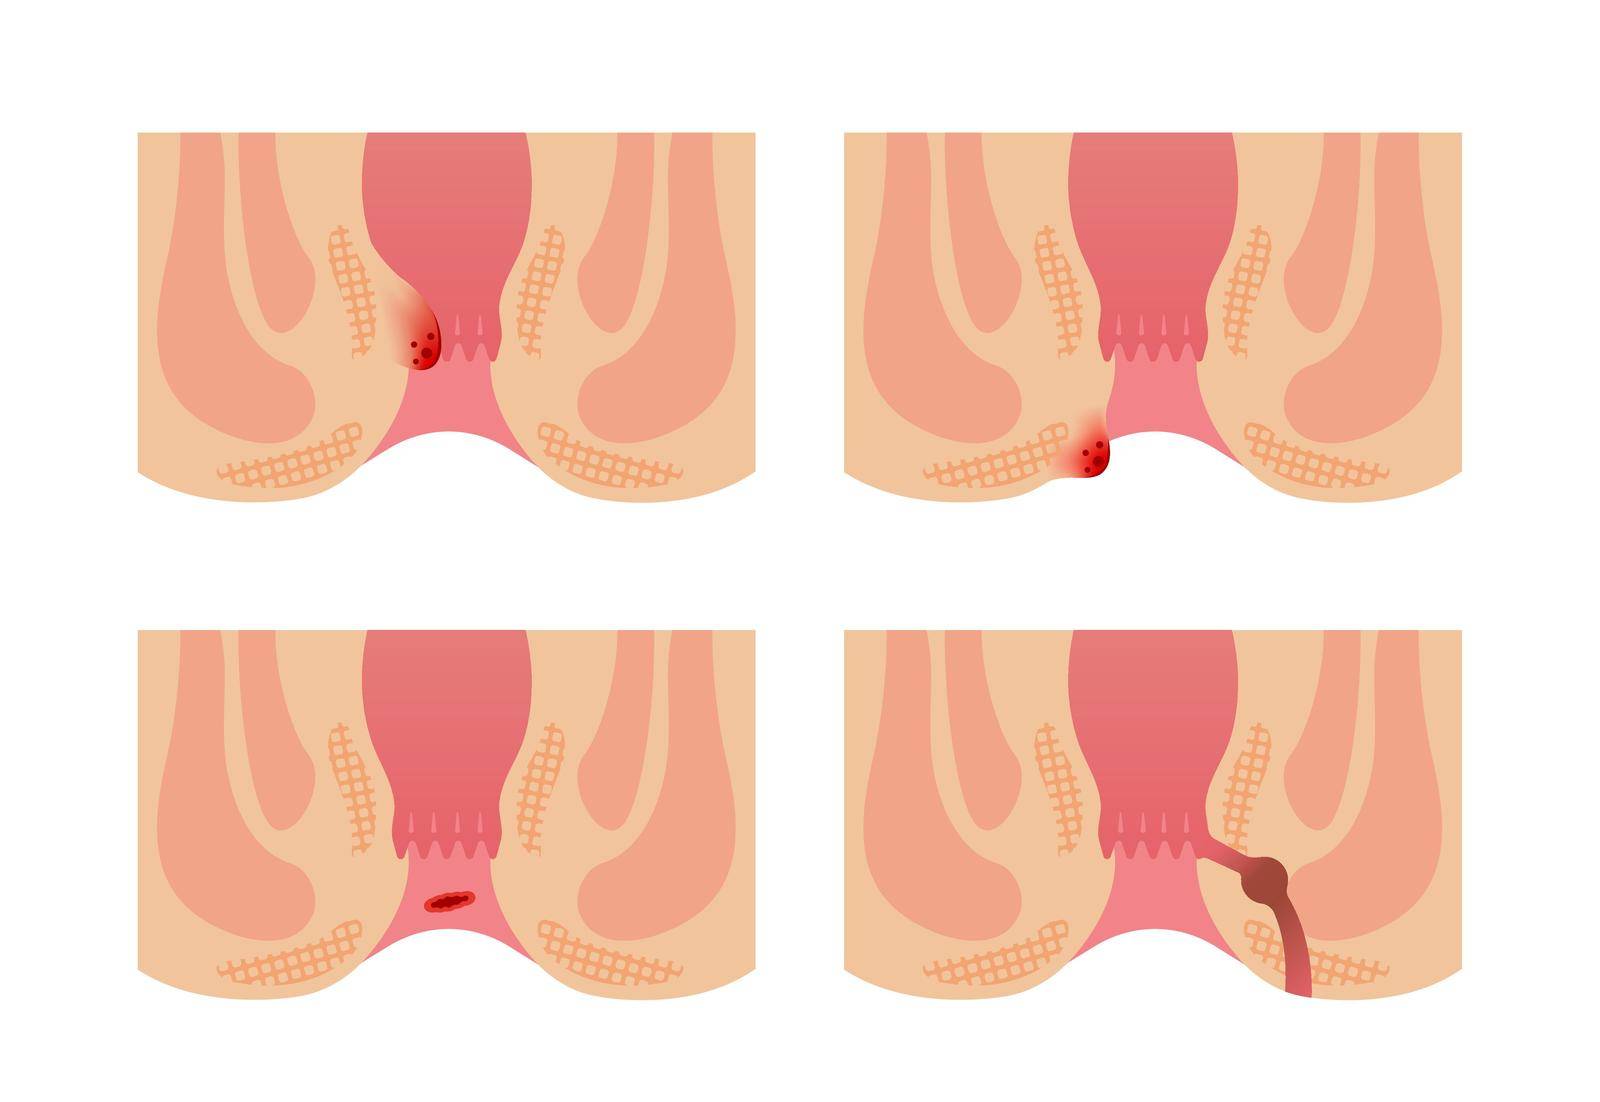 Types of Hemorrhoid flat vector illustration (no text)